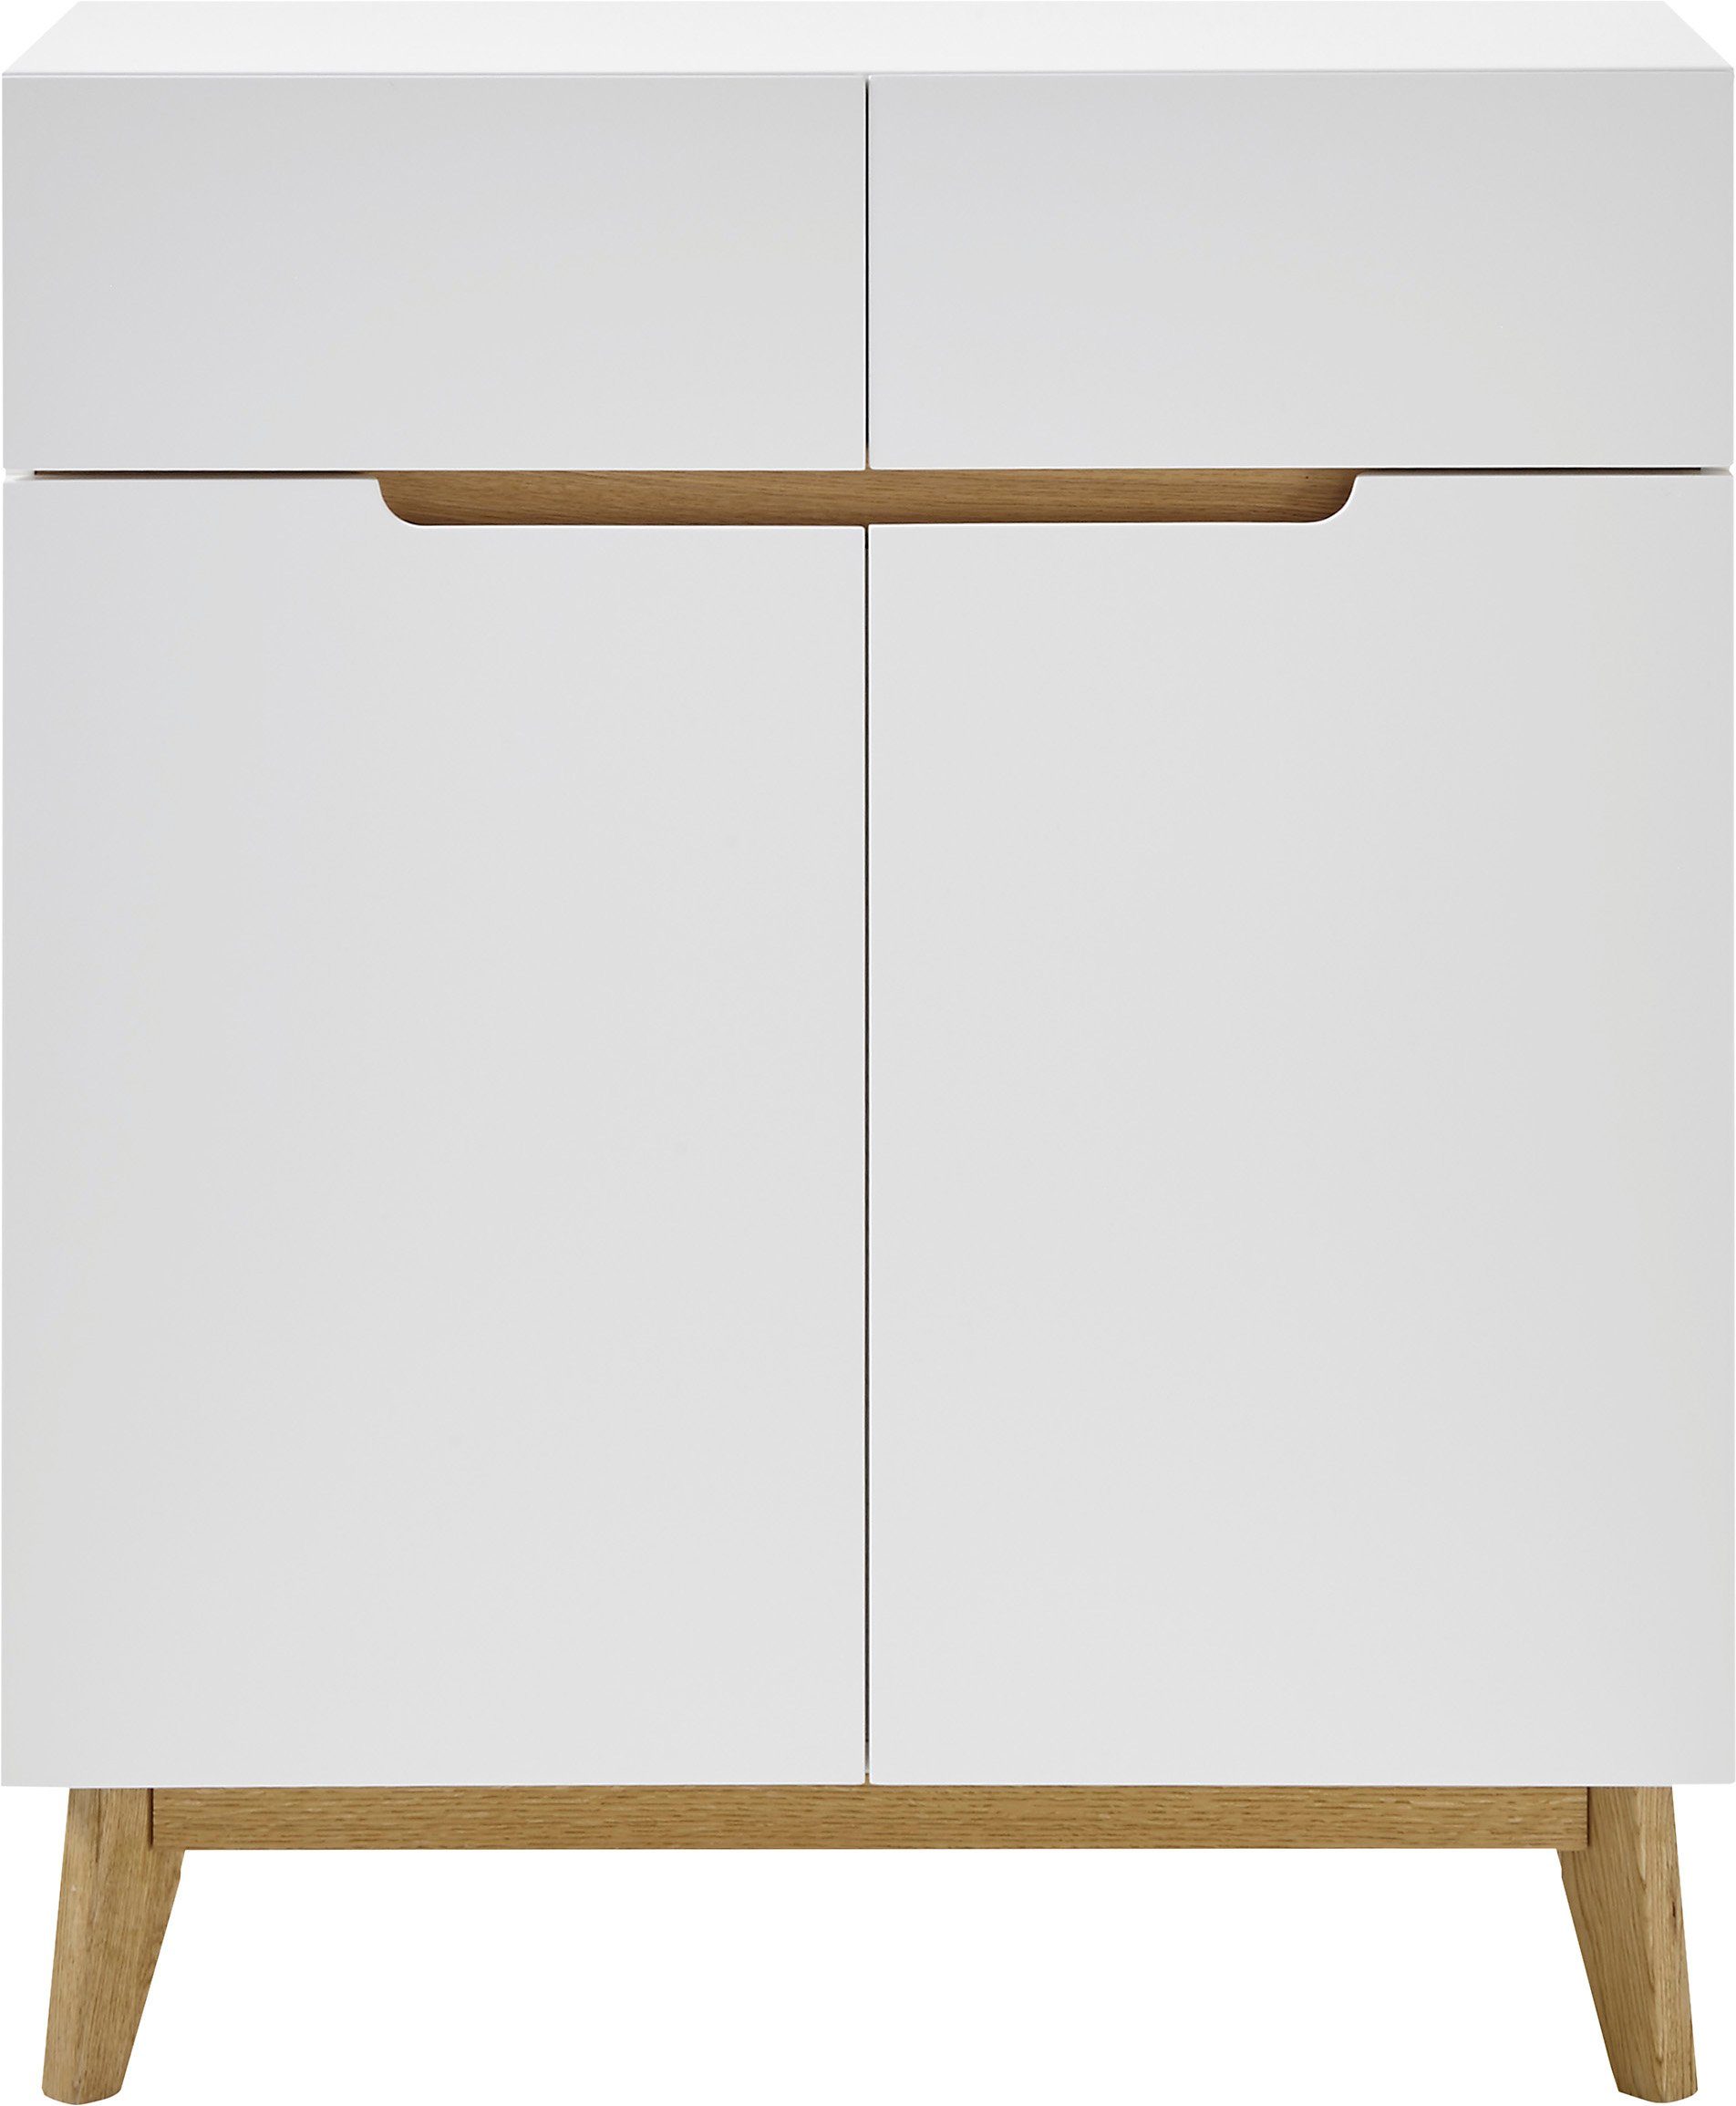 Garderobenschrank MCA Breite furniture ca. 85 cm Cervo